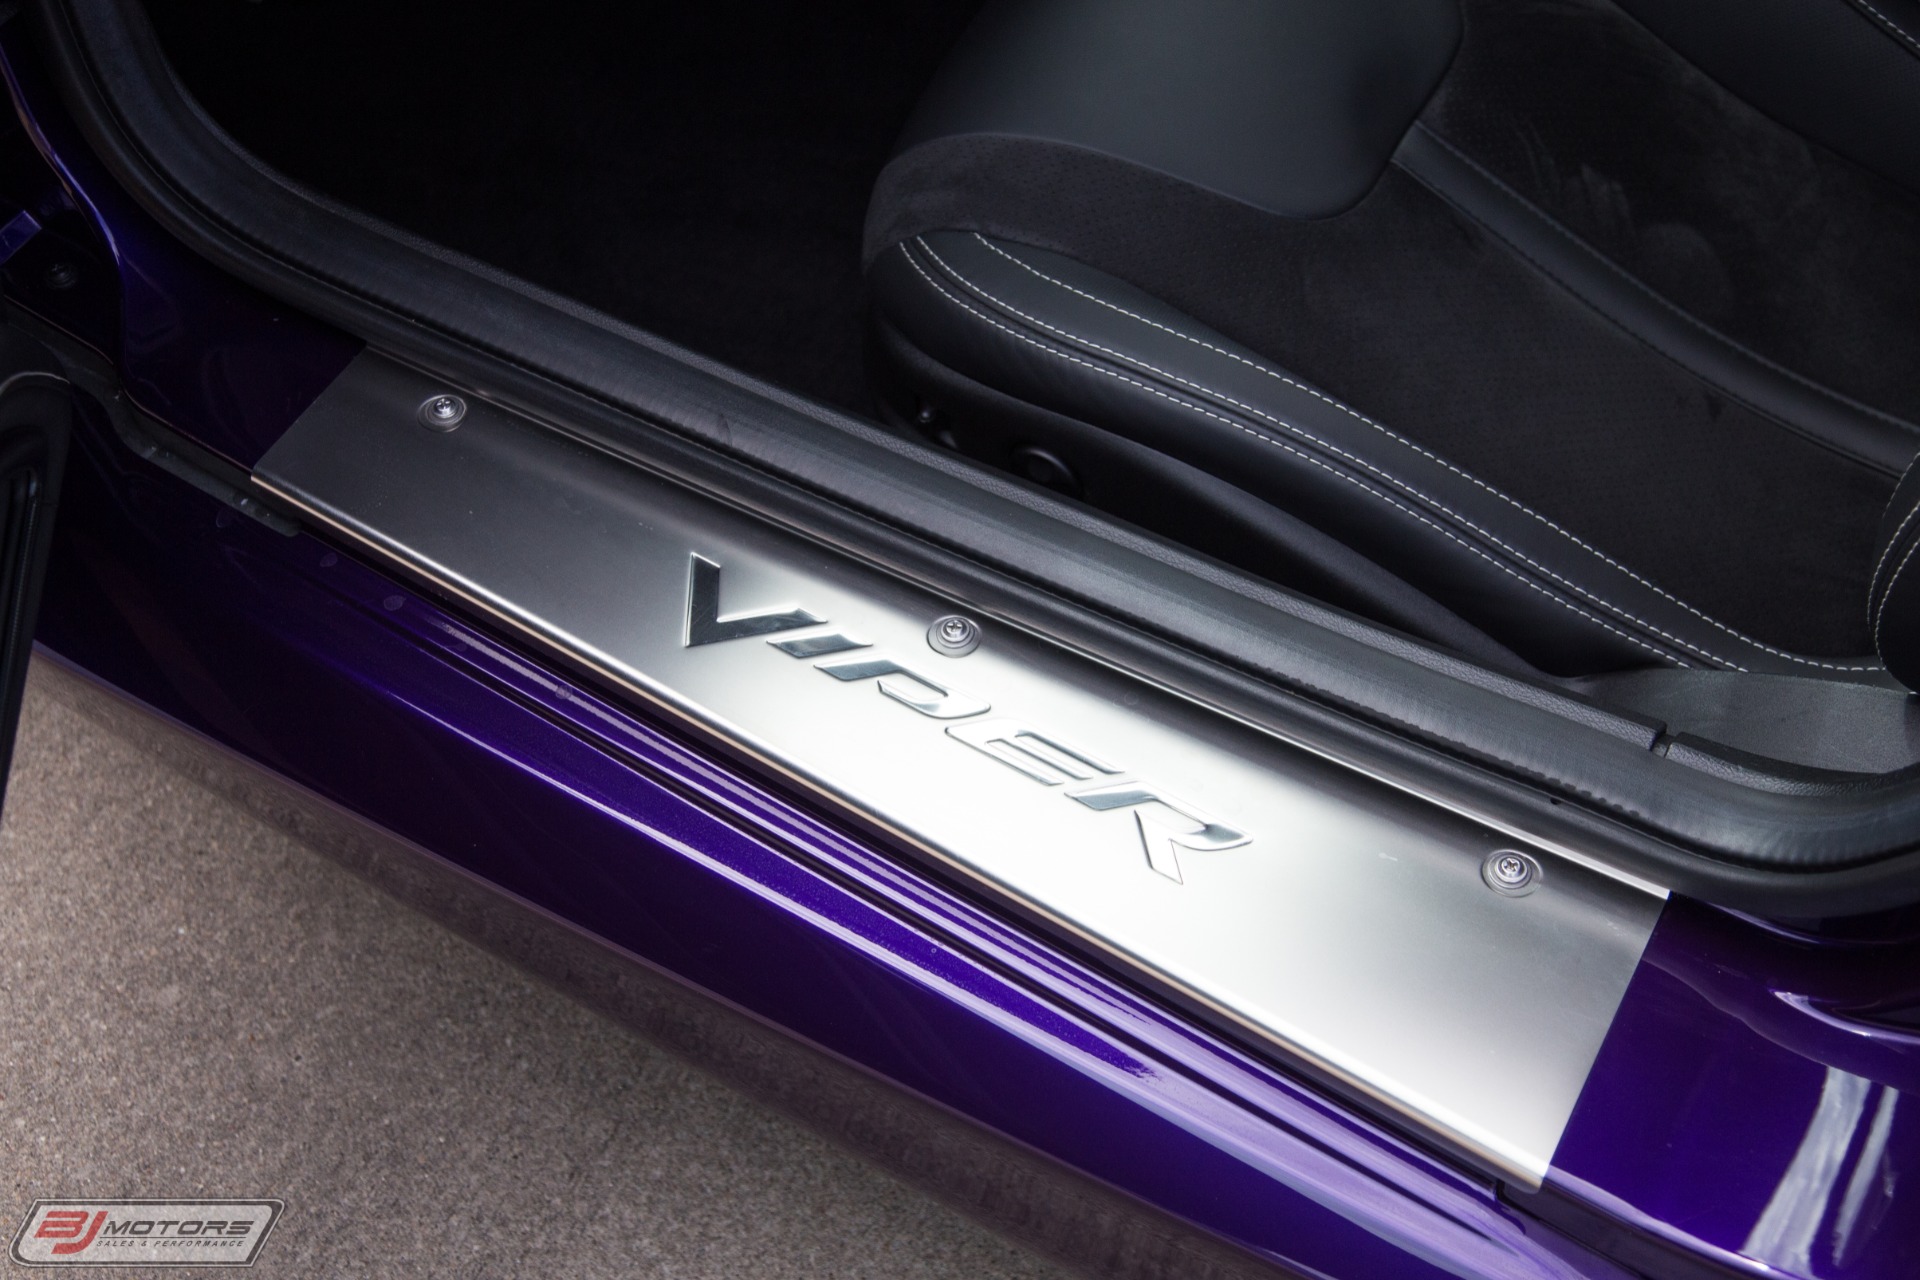 Used-2015-Dodge-Viper-GTC-Stryker-Purple